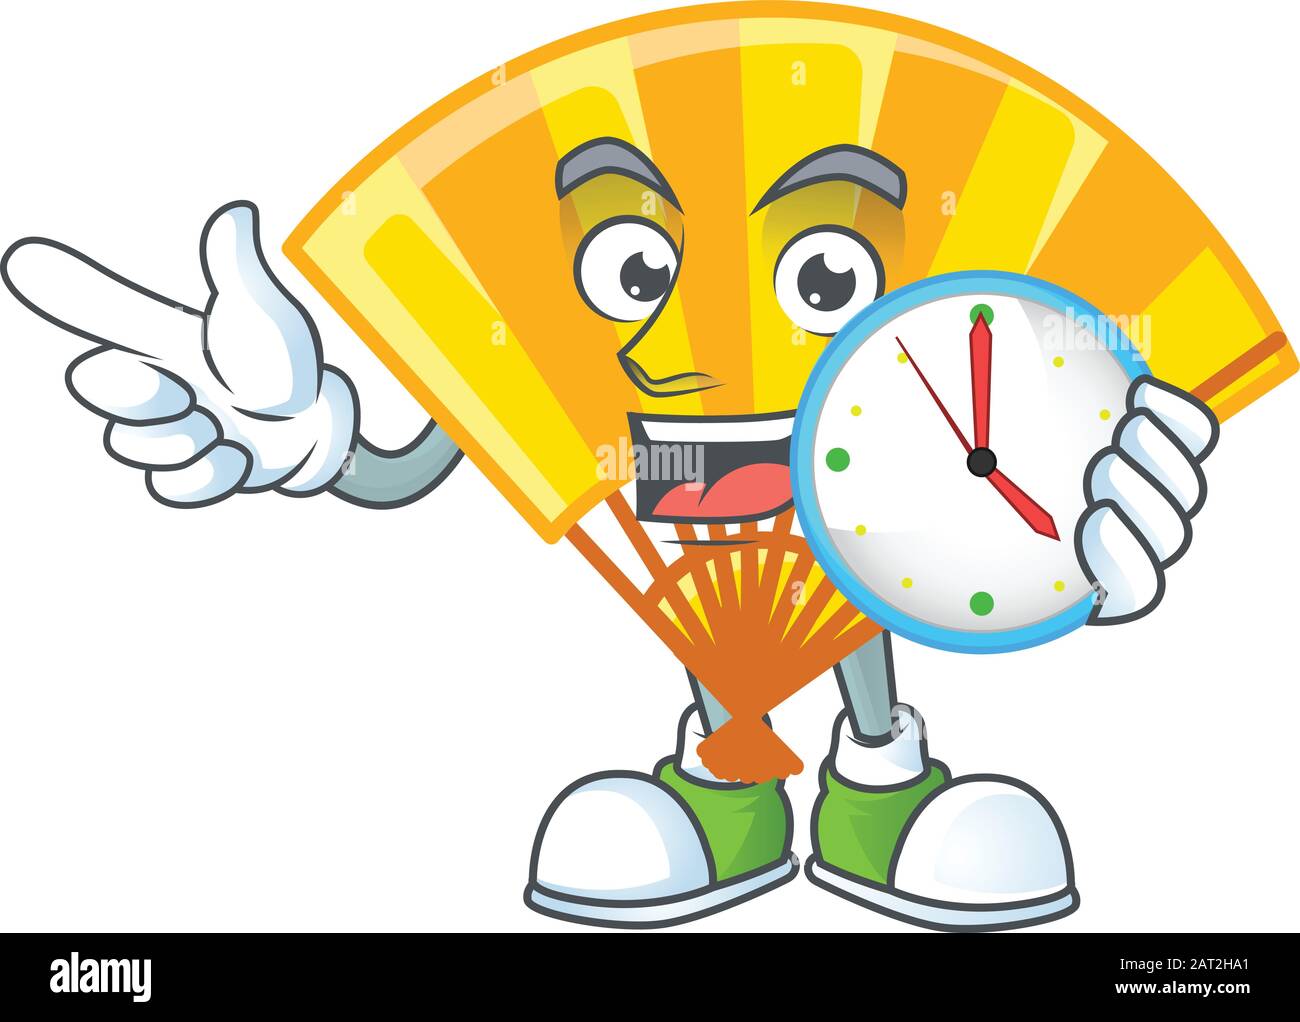 cartoon character style gold chinese folding fan having clock Stock Vector